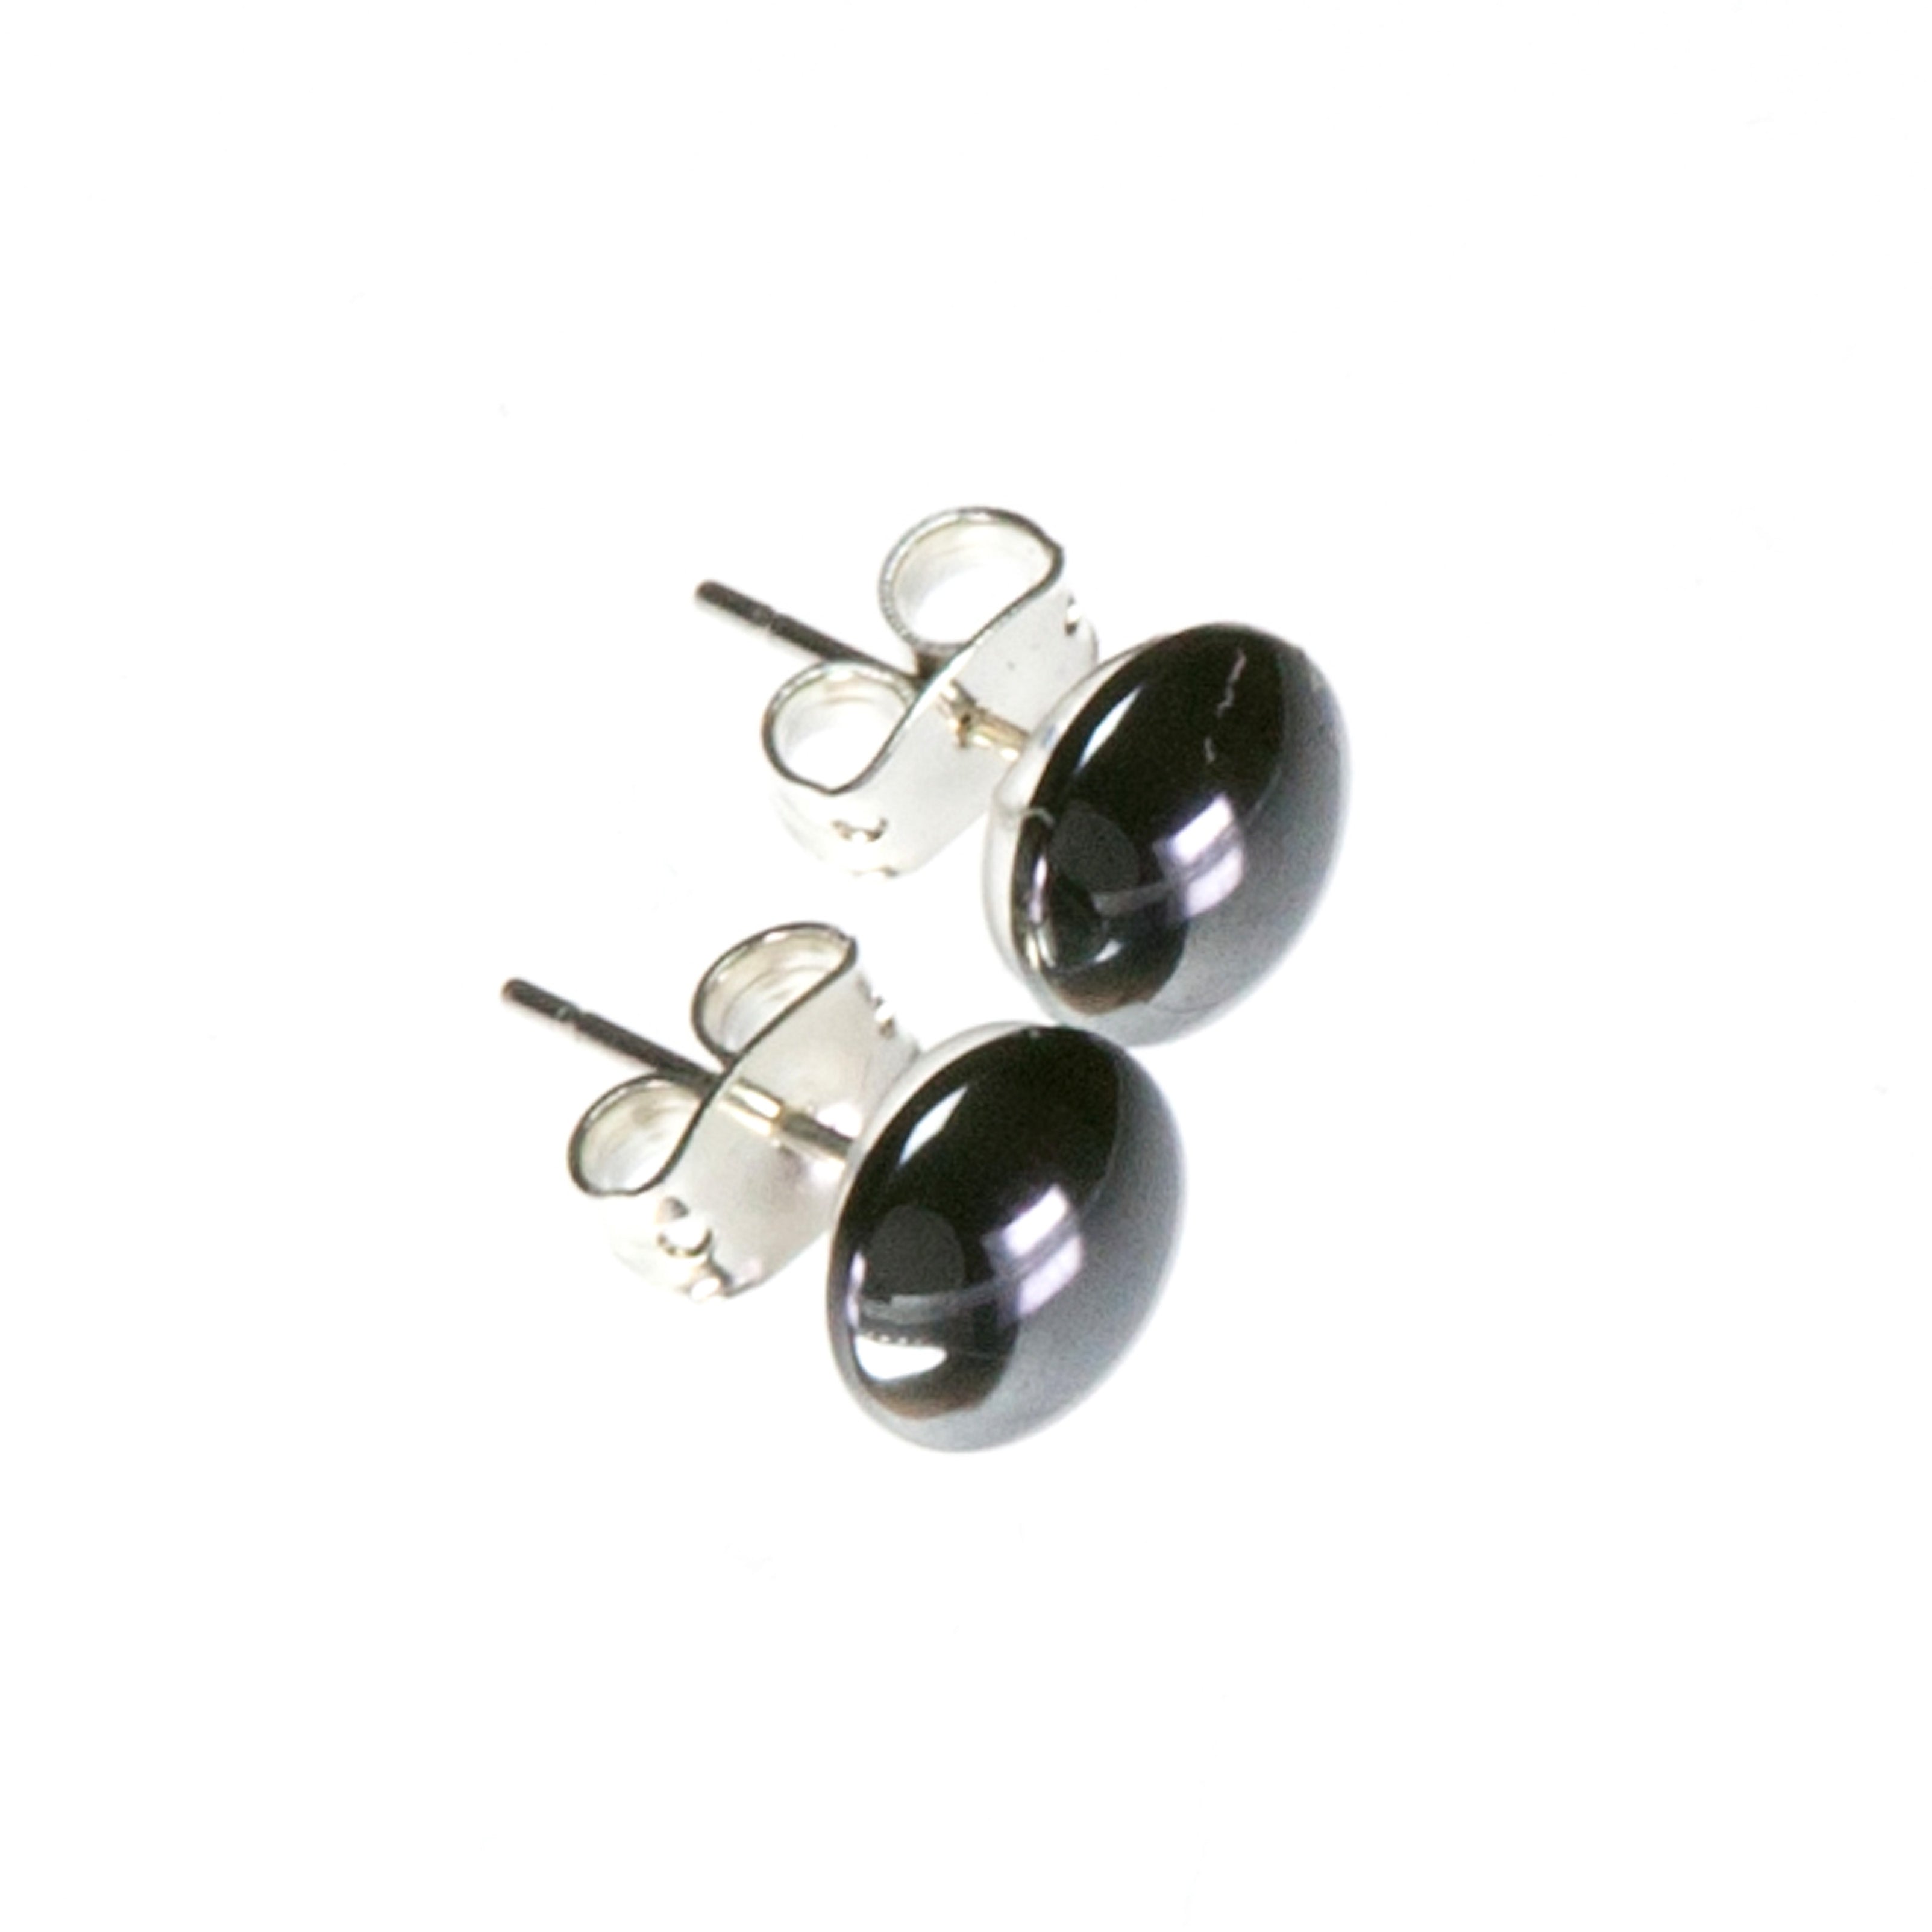 Metallic grey Hematite stud earrings with 8mm hematite cabochon